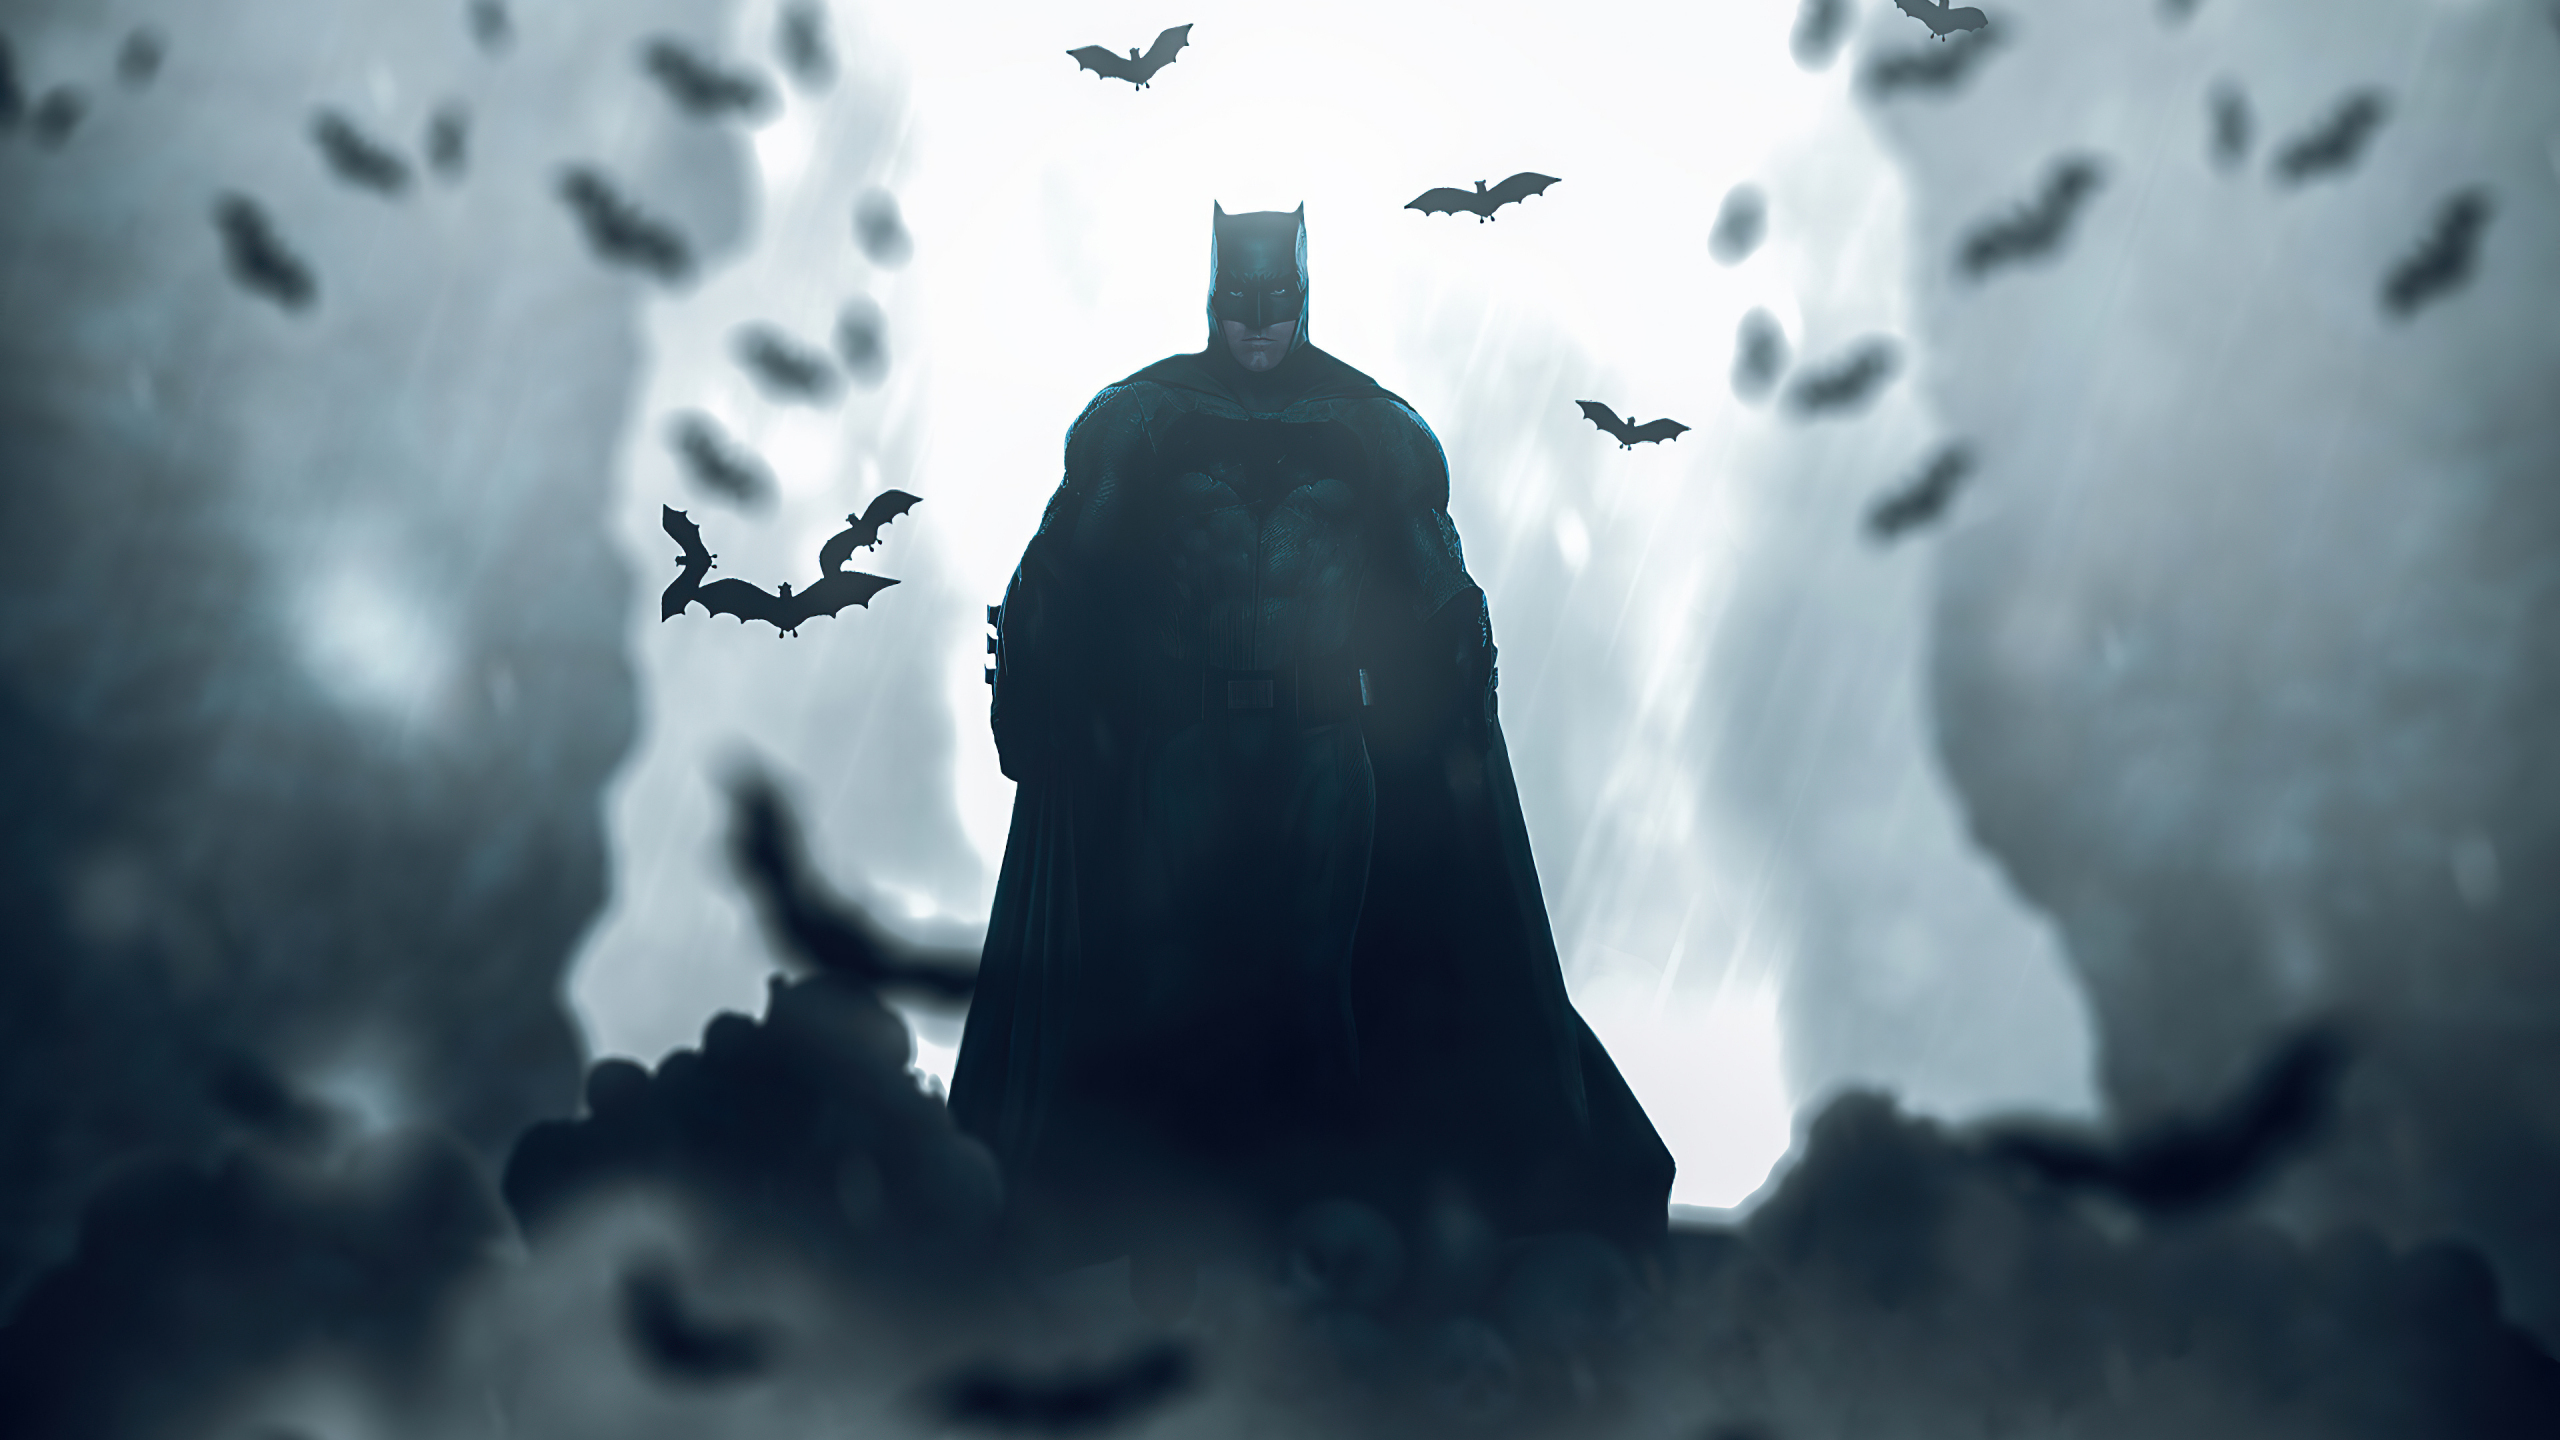 batman silhouette wallpaper